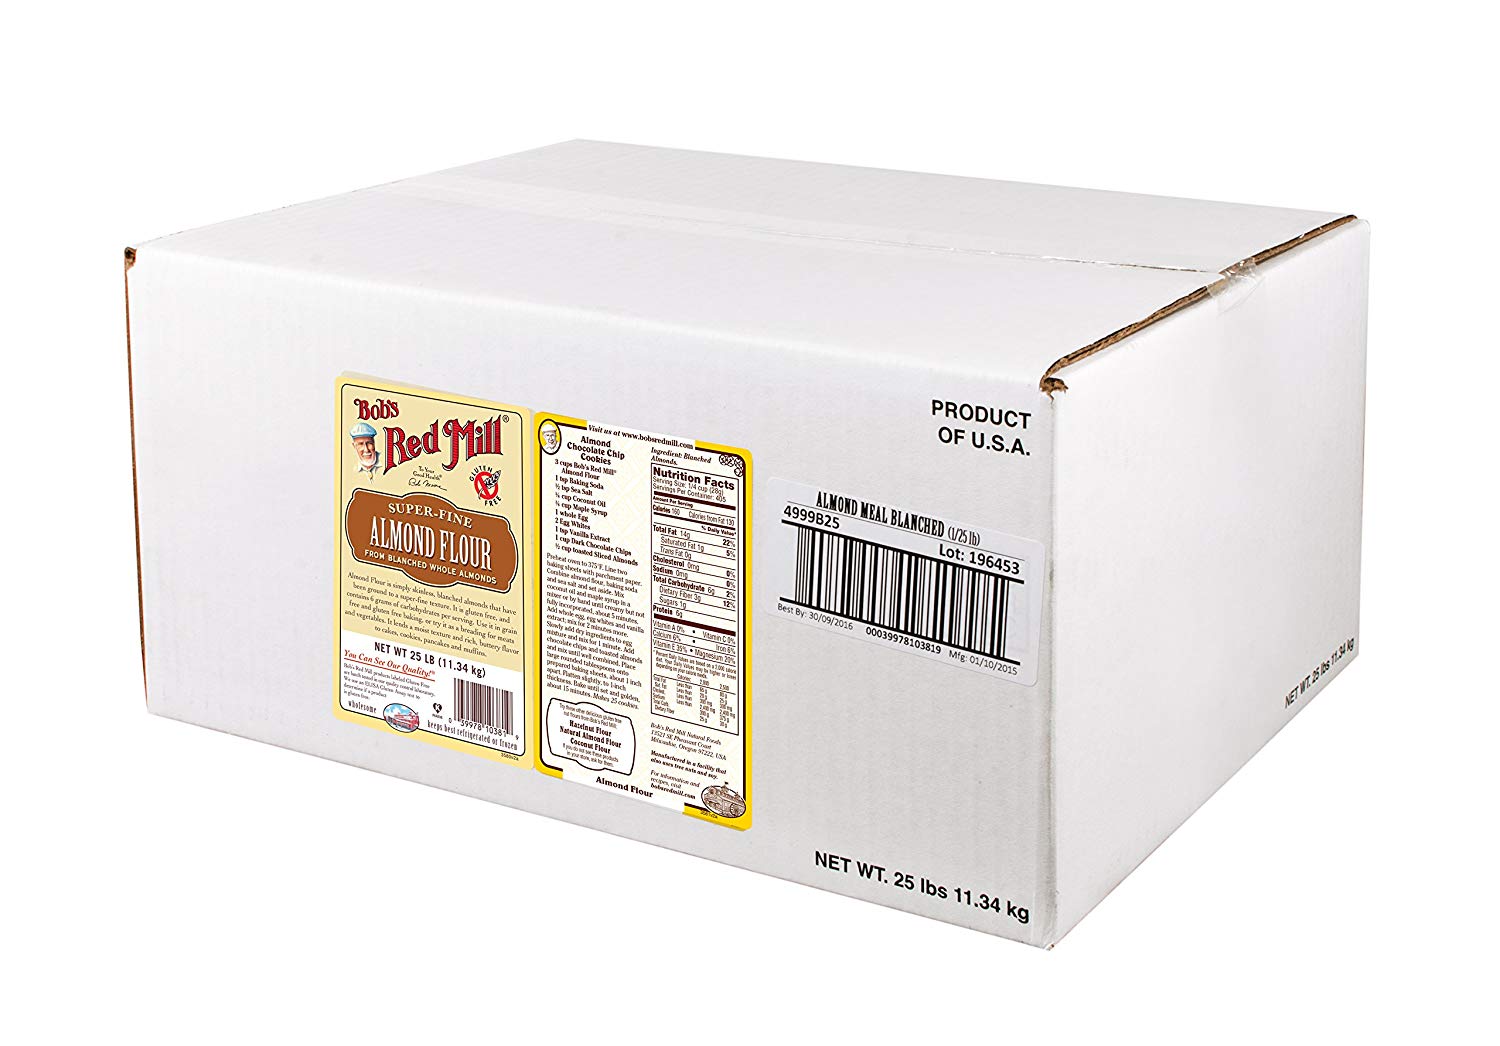 BOBS RED MILL: Bulk Almond Meal Flour, 25 lb - 0039978103819